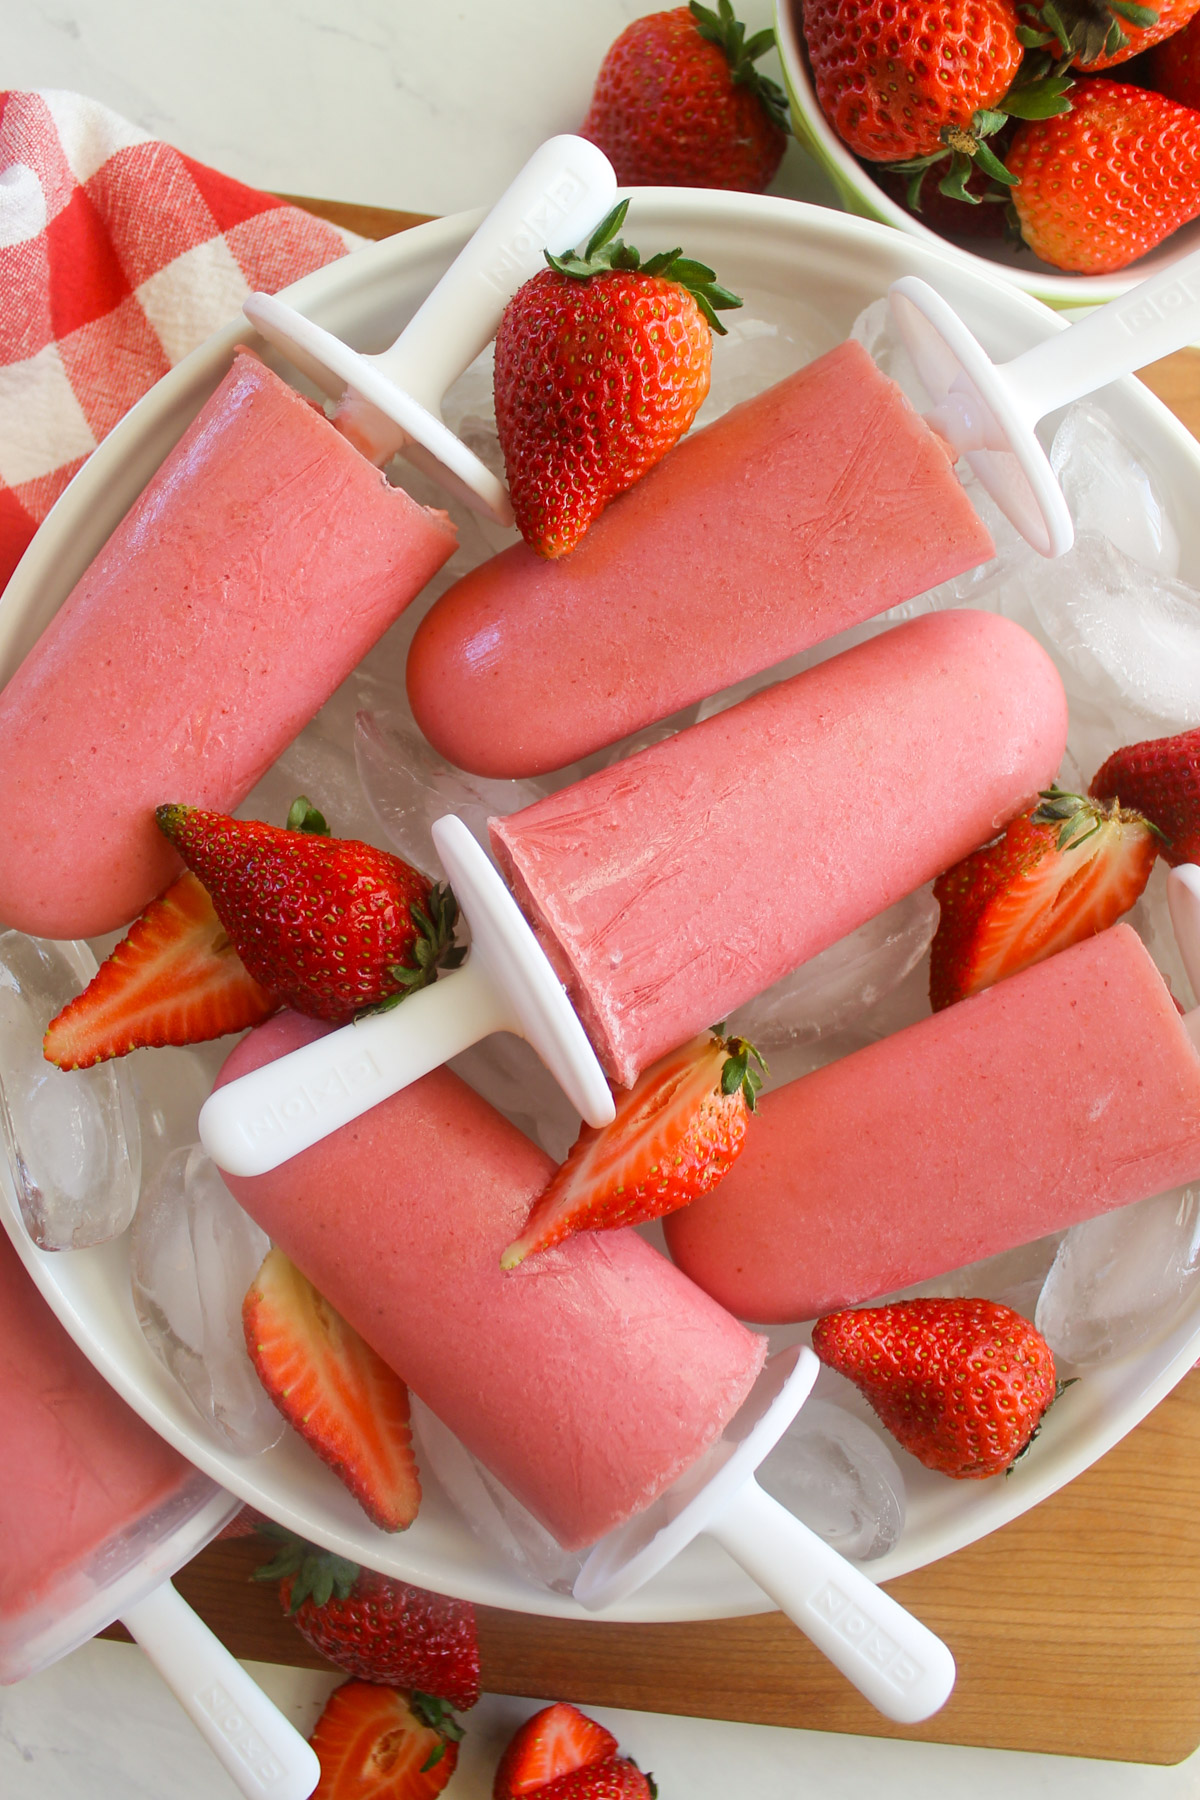 Strawberry Banana Yogurt Popsicles on ice with fresh sliced strawberries.